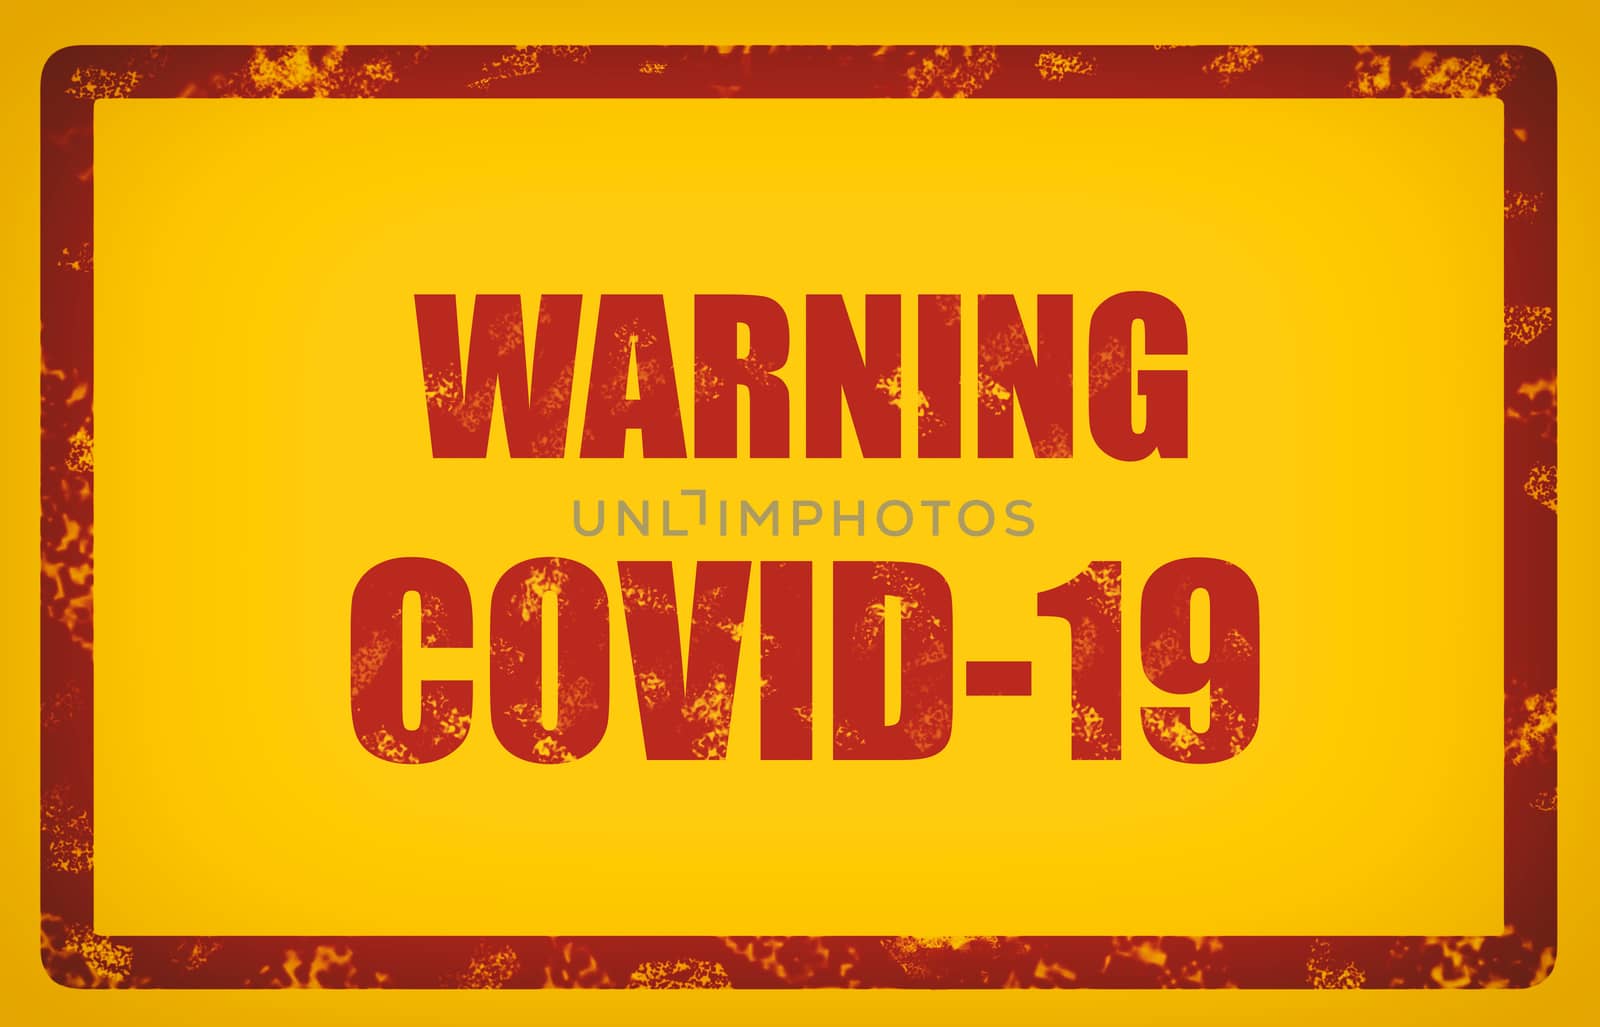 COVID-19 warning sign red text on yellow background. Coronavirus graphic design corona virus caution billboard illustration .